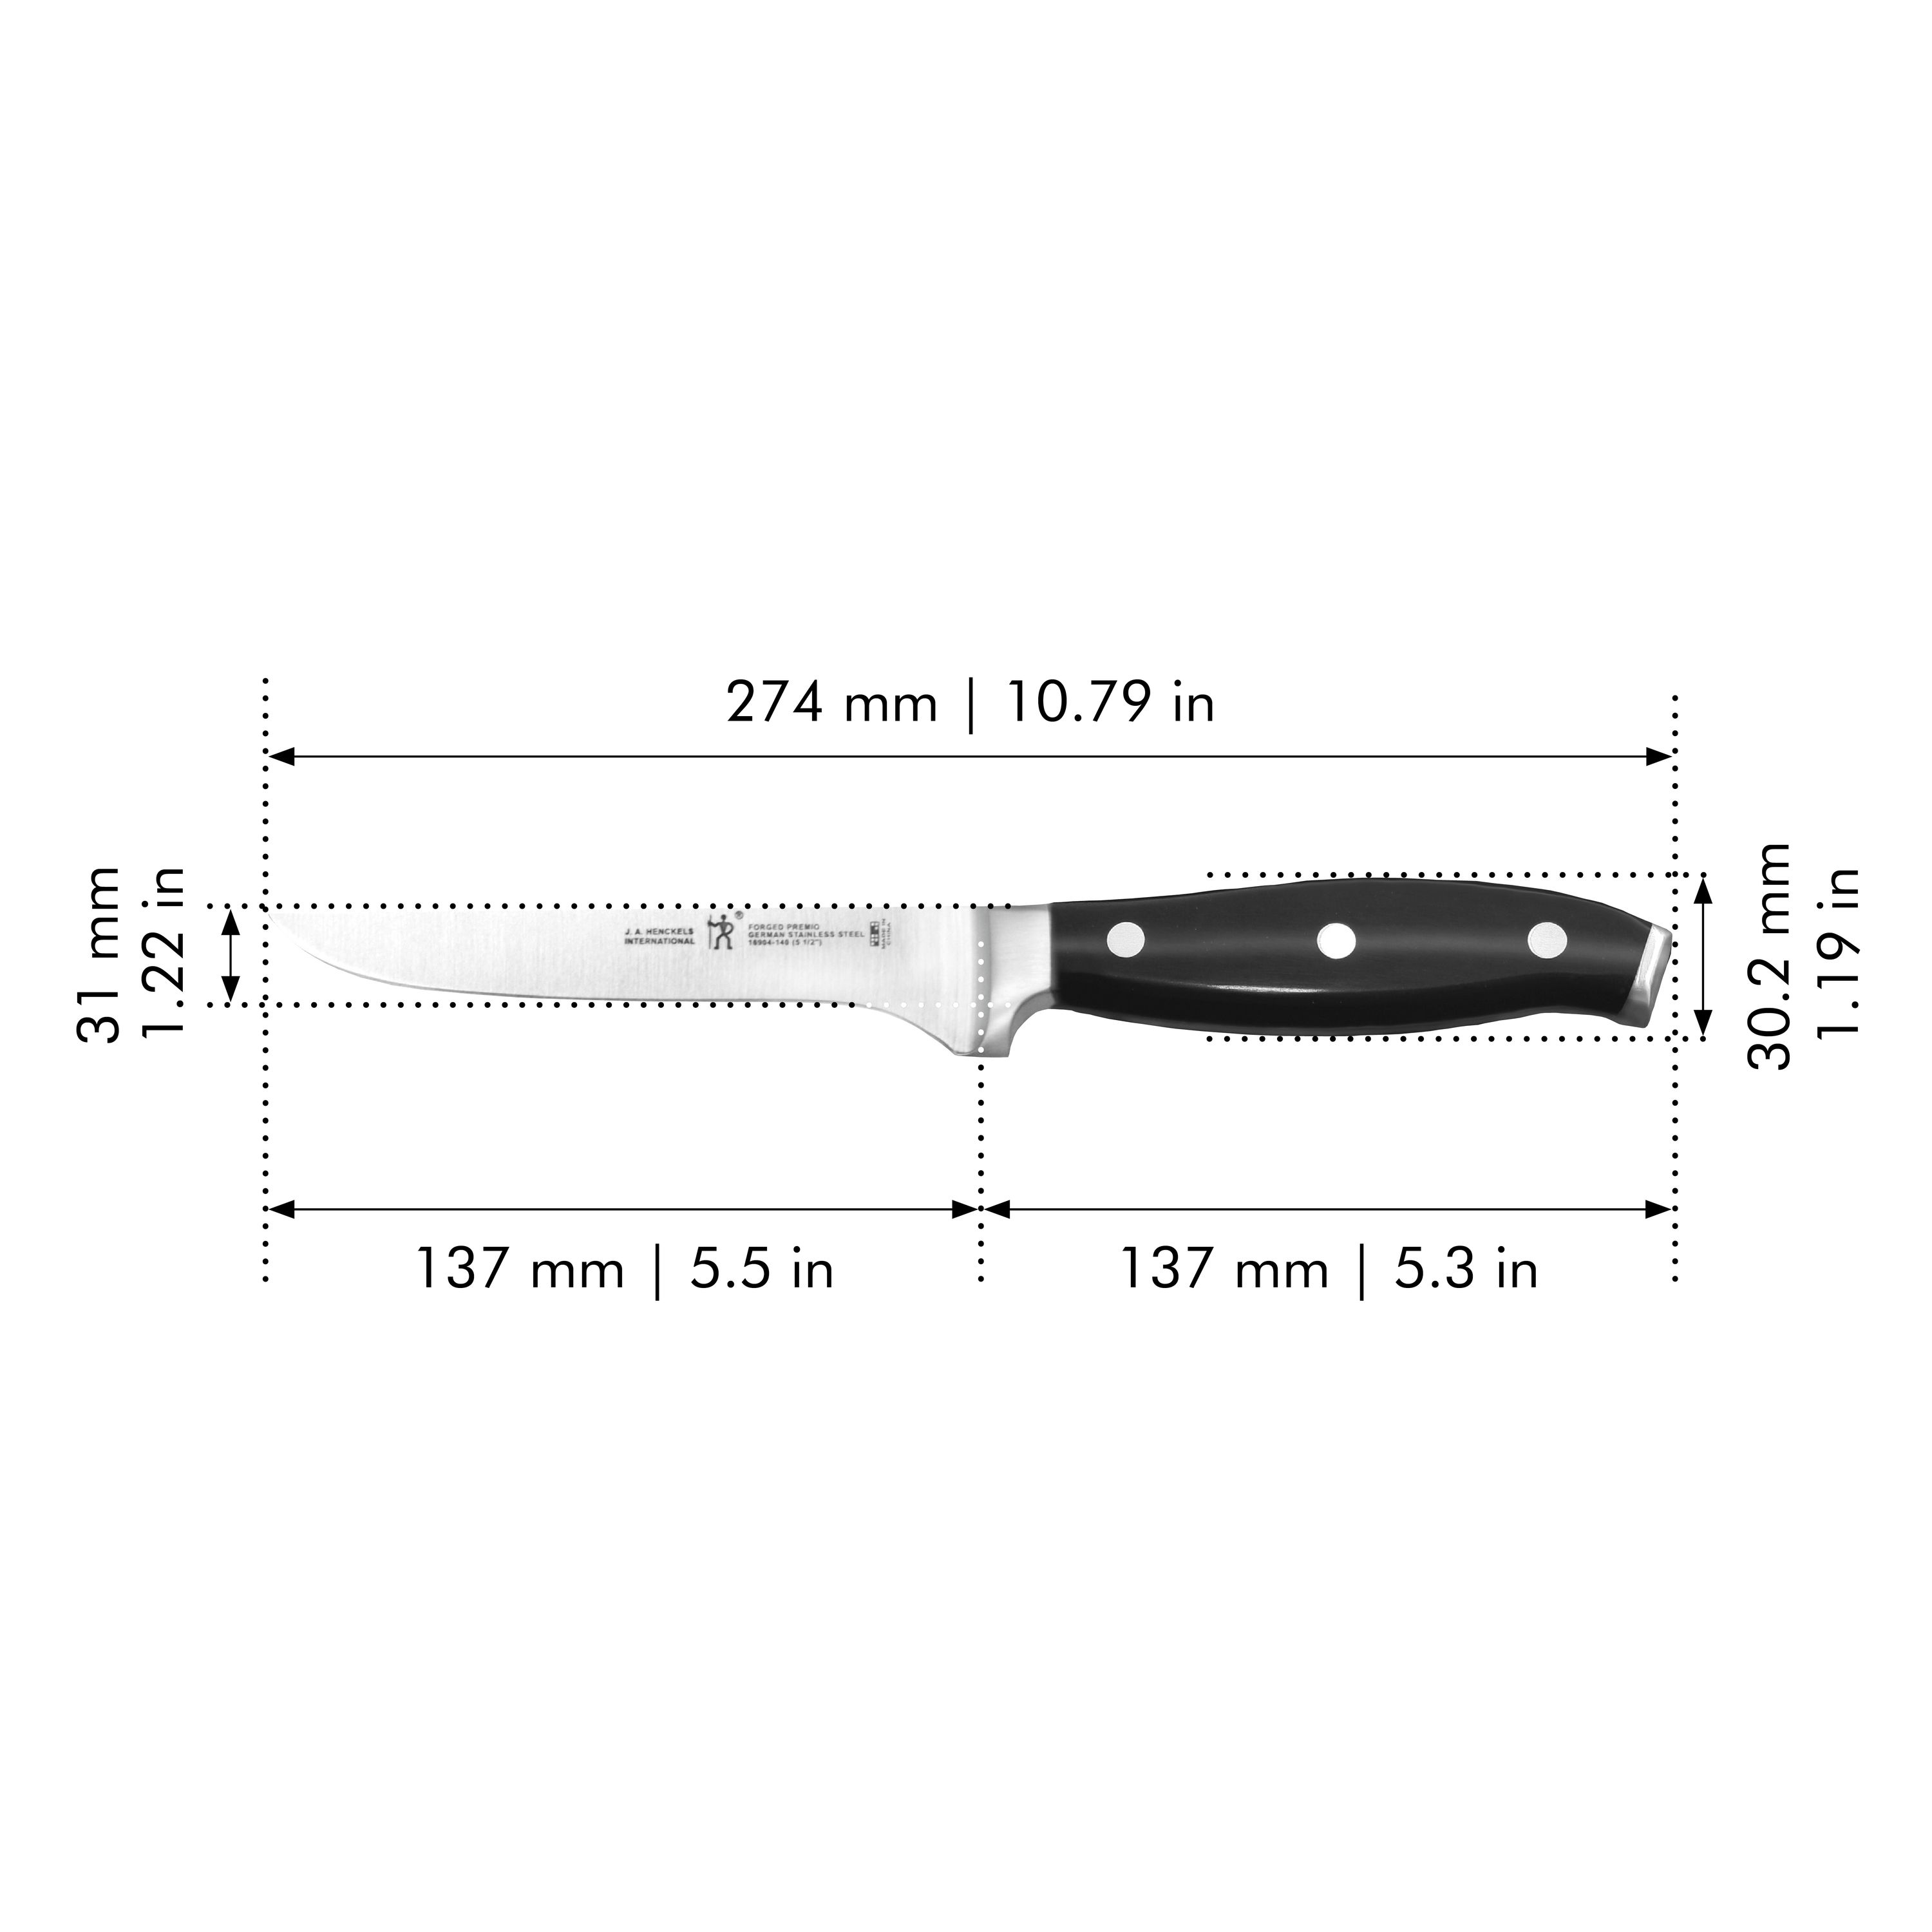 J.A. Henckels International Classic 5.5 Boning Knife